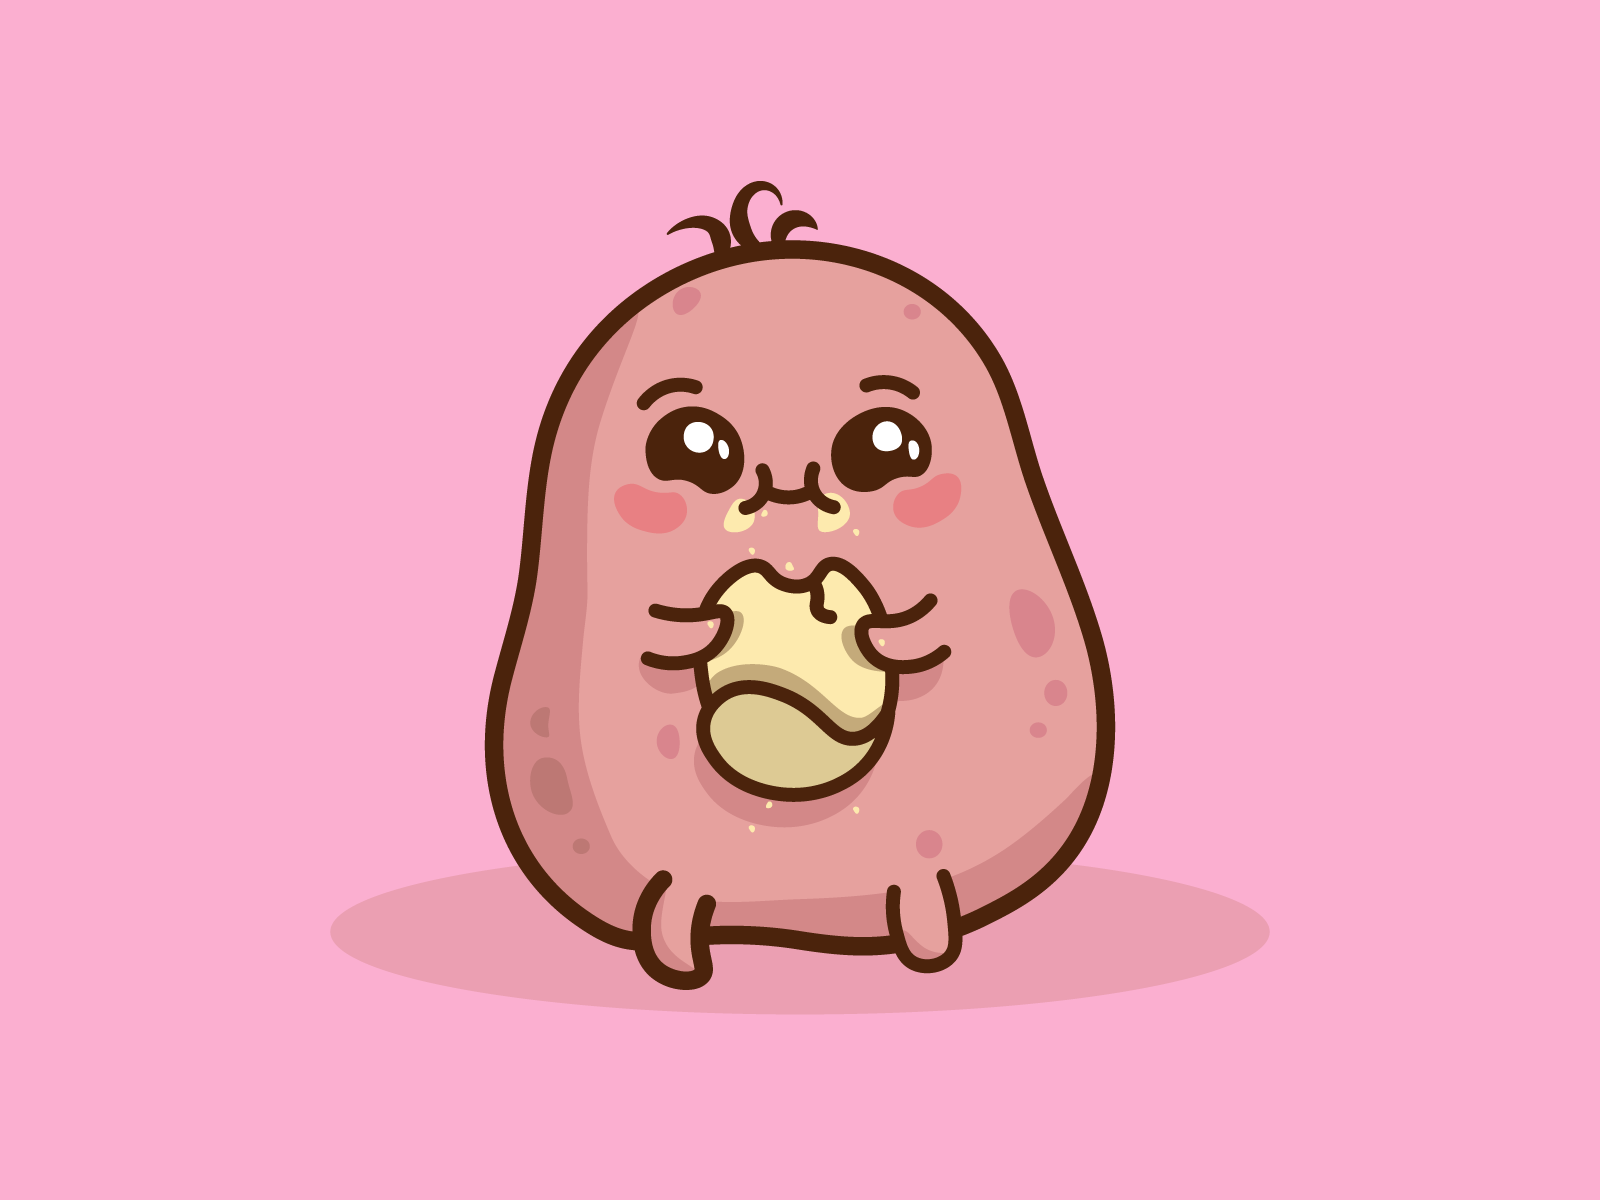 Potato (@potato_playz) | TikTok